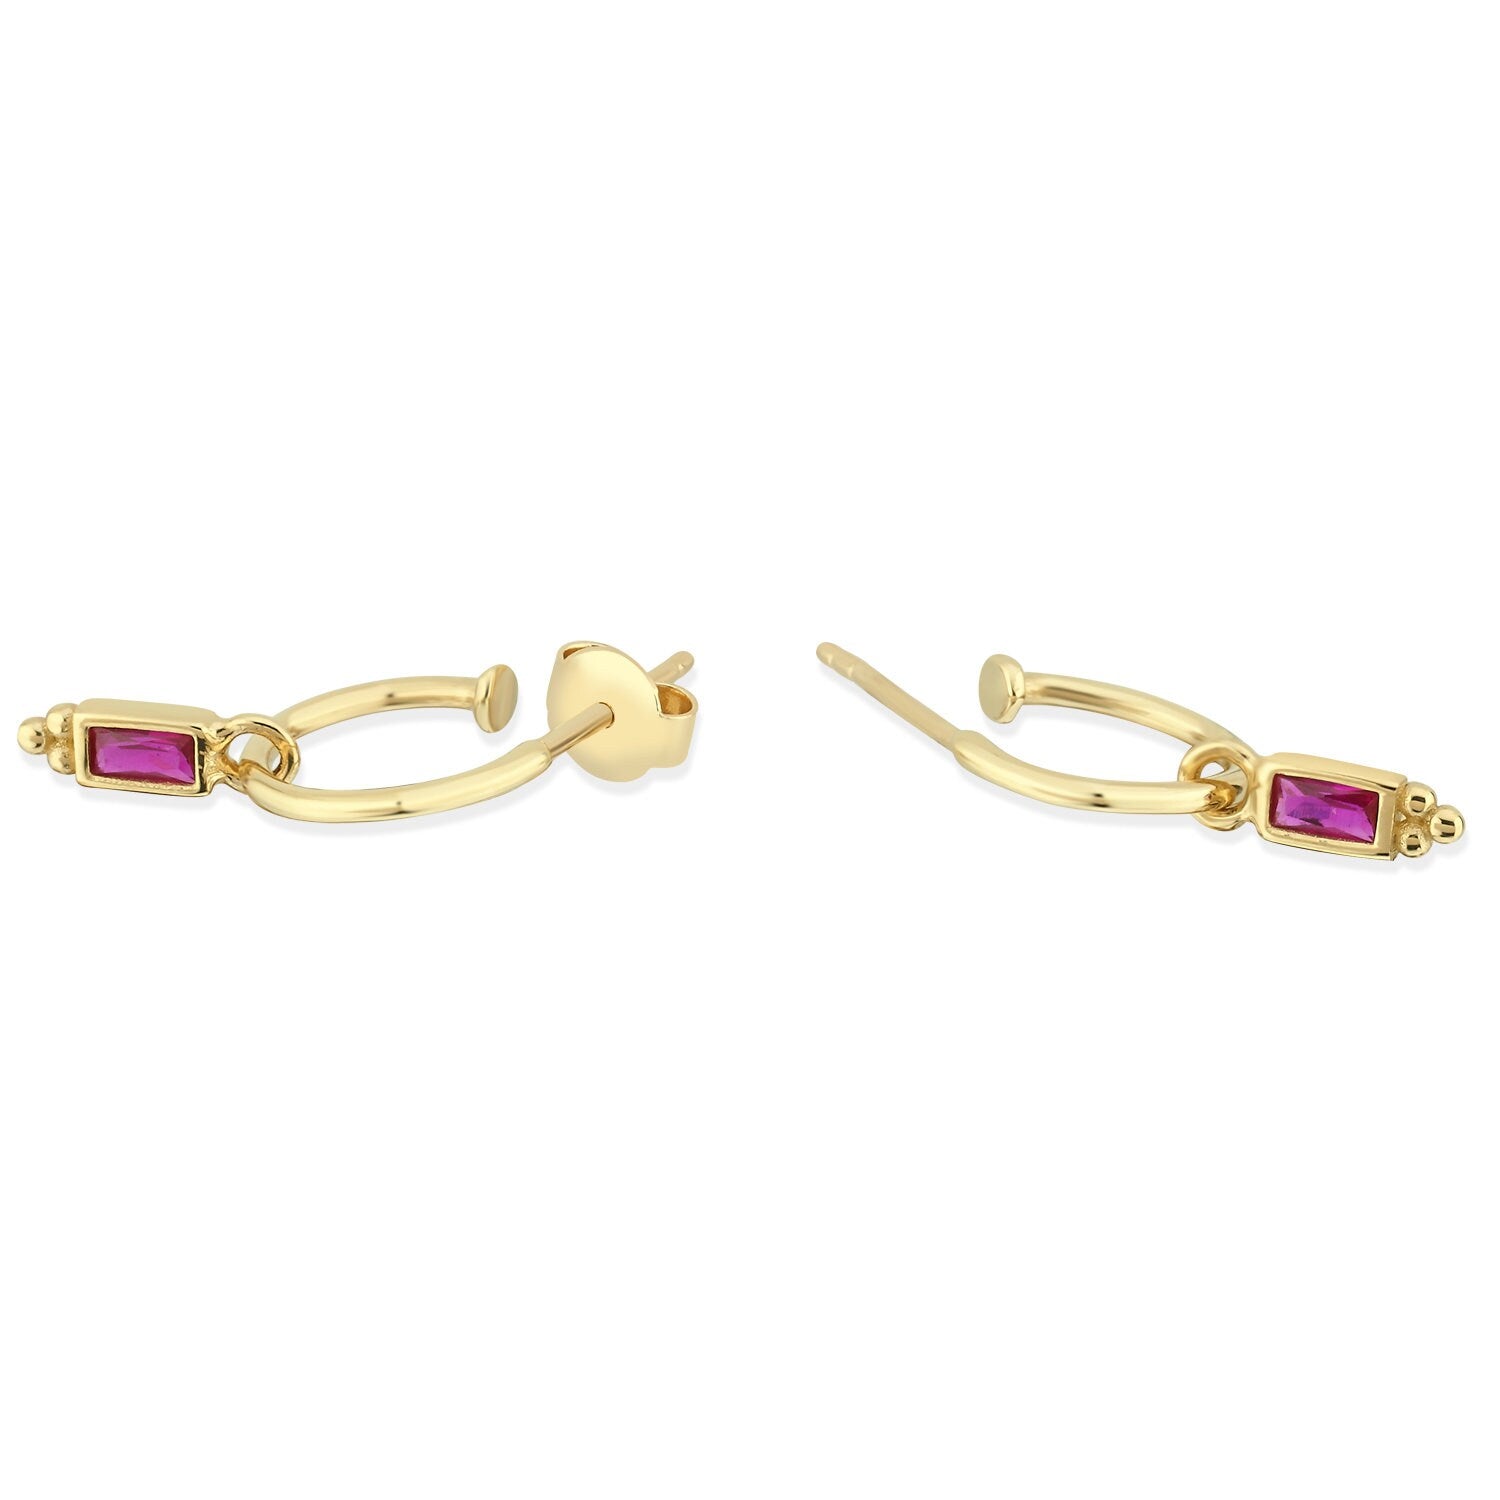 14K Gold Vintage Pink Stone Earrings